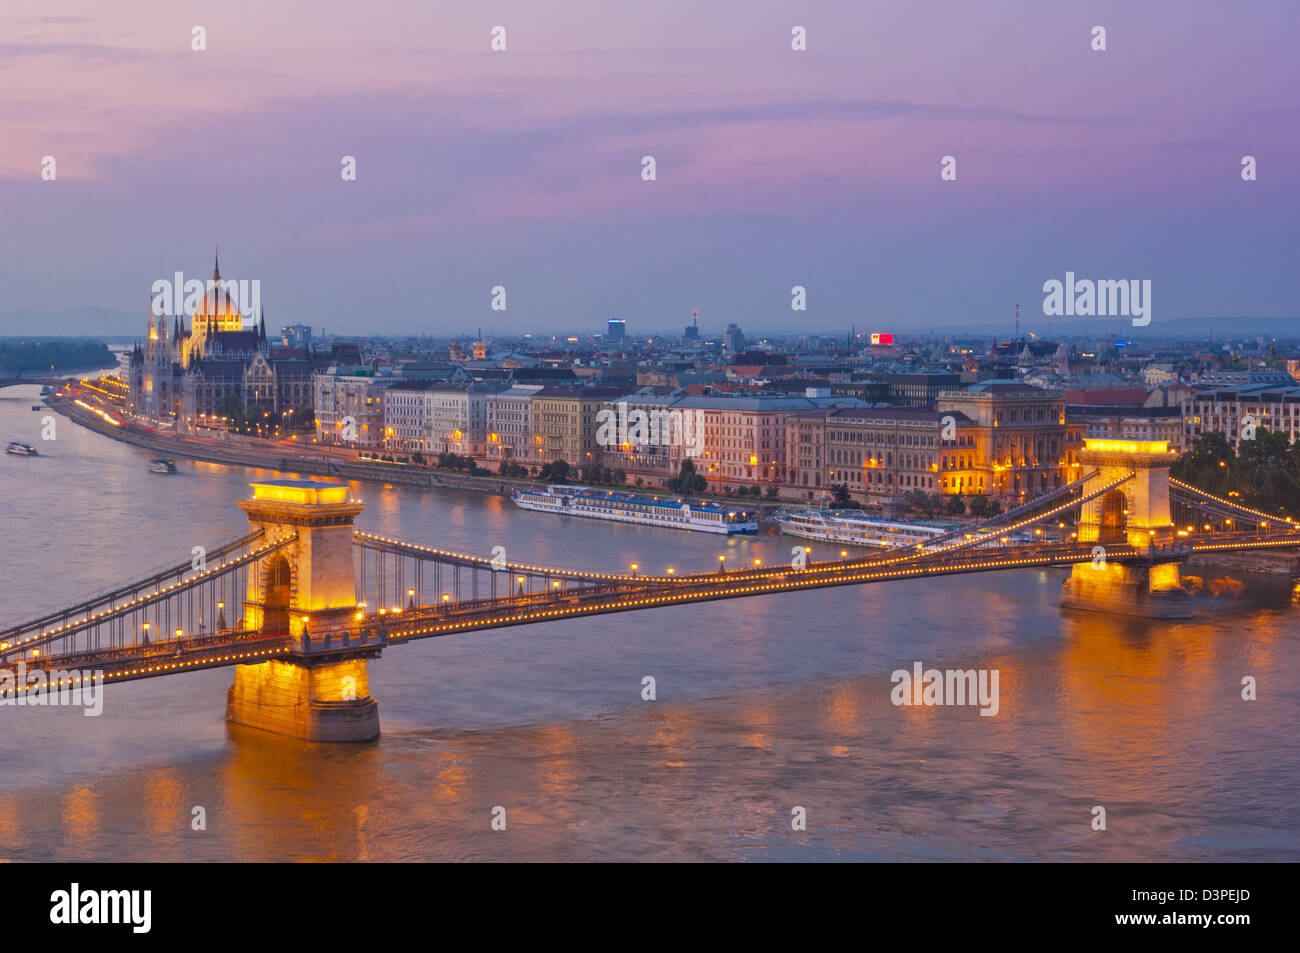 The Chain Bridge, Szechenyi Lanchid, over the river Danube at night  Budapest, Hungary, Europe, EU Stock Photo